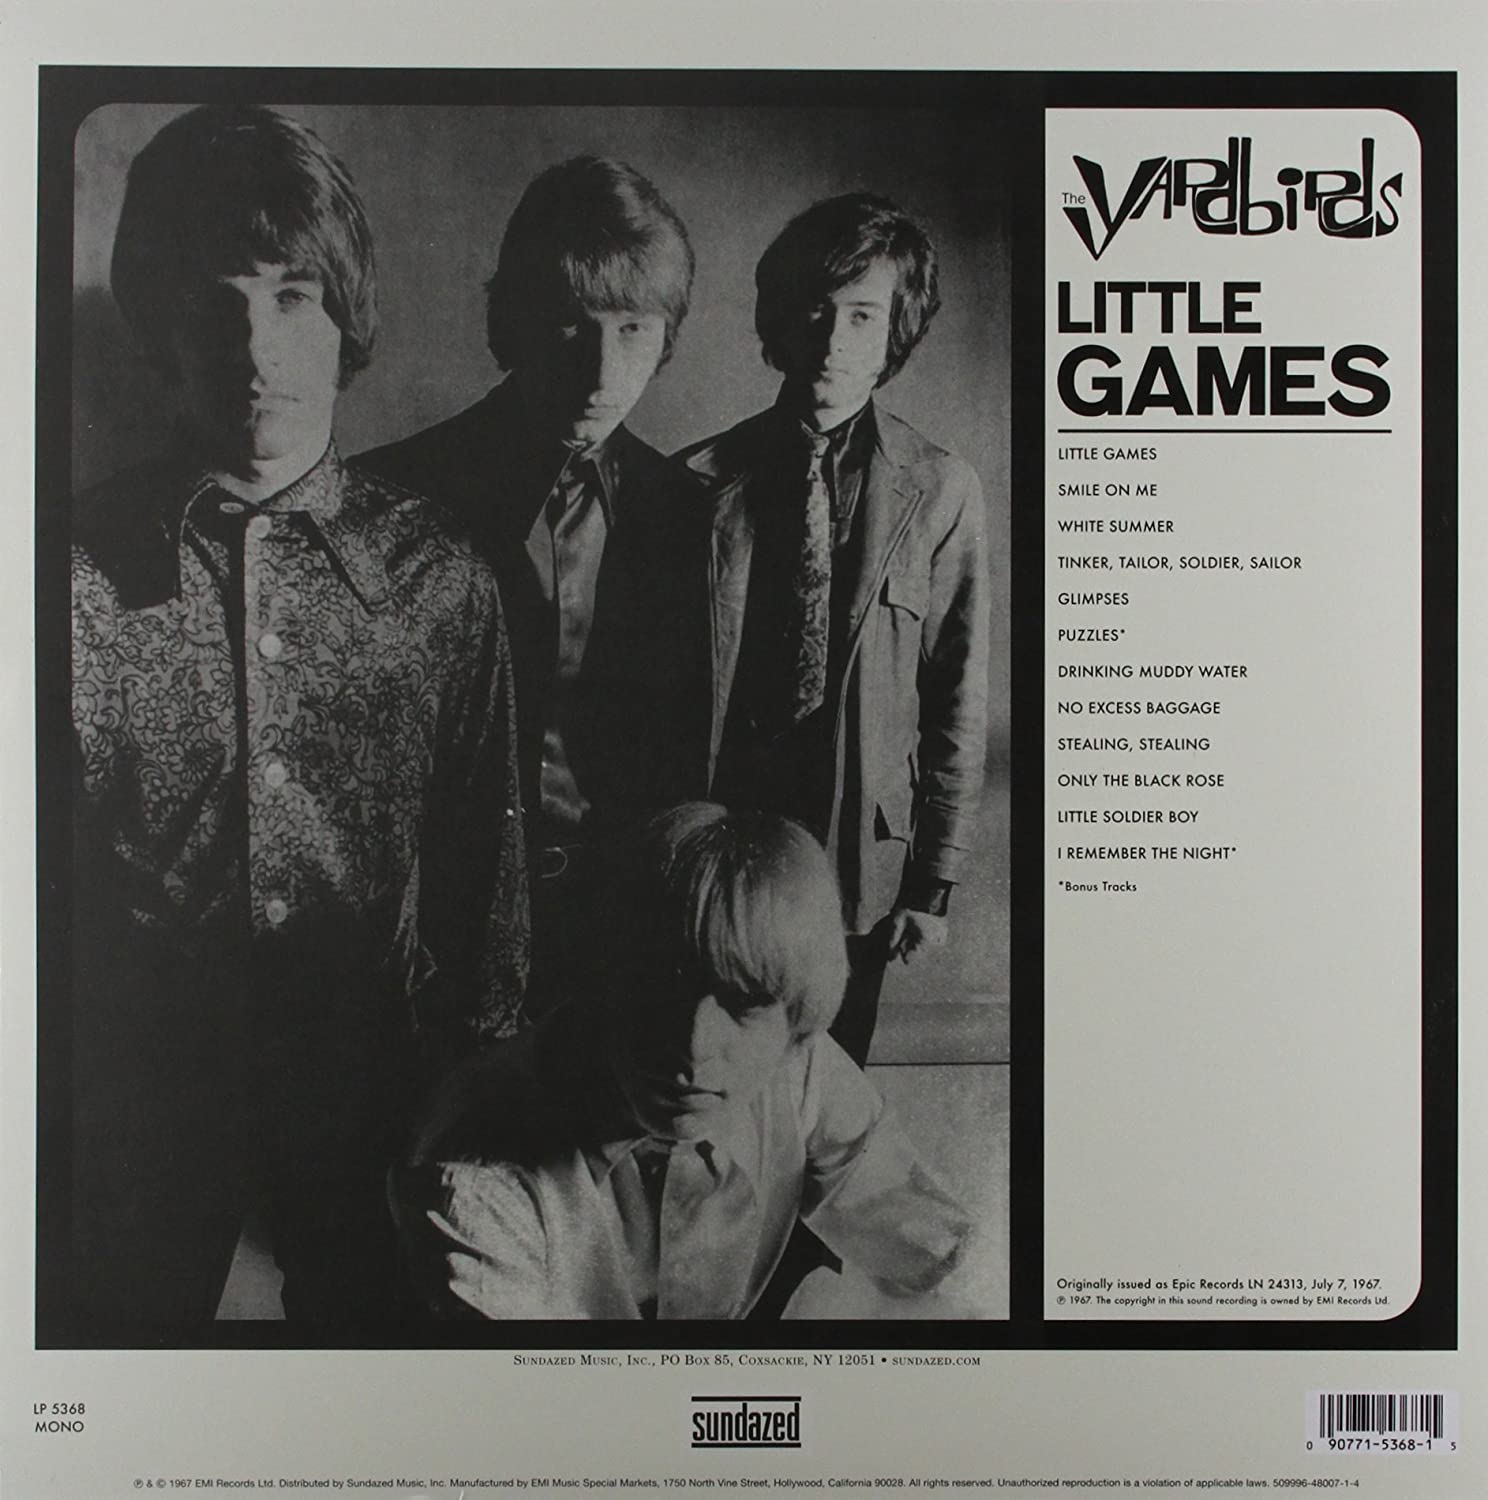 The Yardbirds - Little Games (1967). 